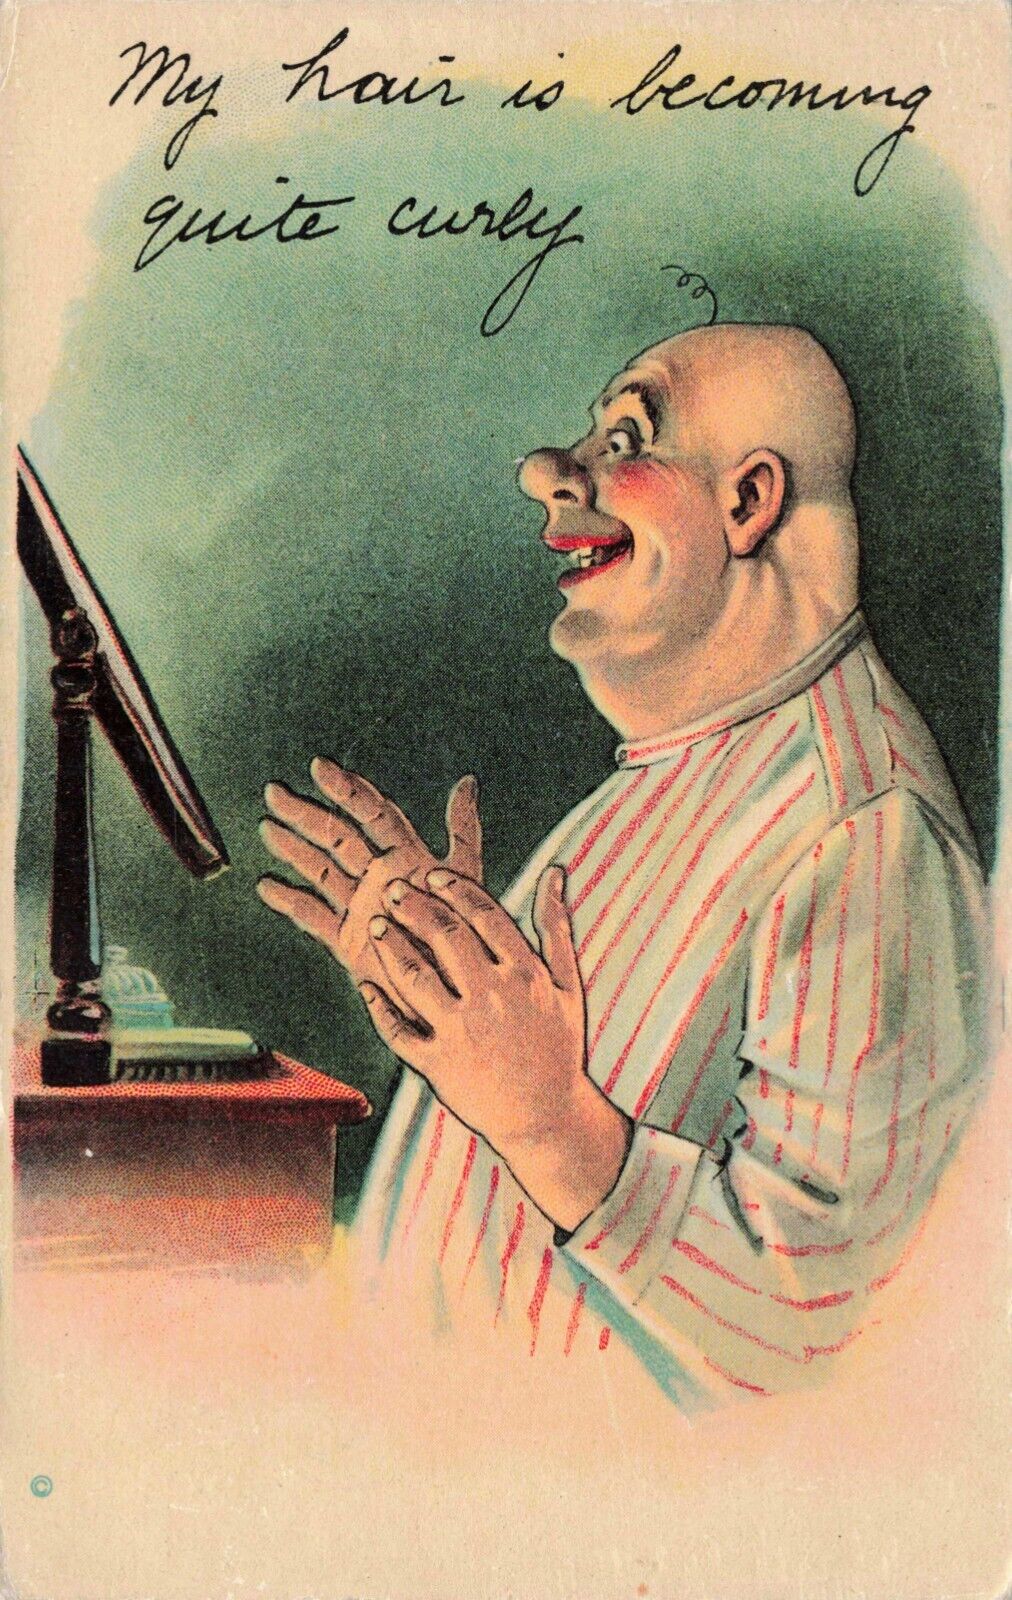 Smiling Bald Man Has One Curly Hair Humor Comic Series #16 Vintage Postcard